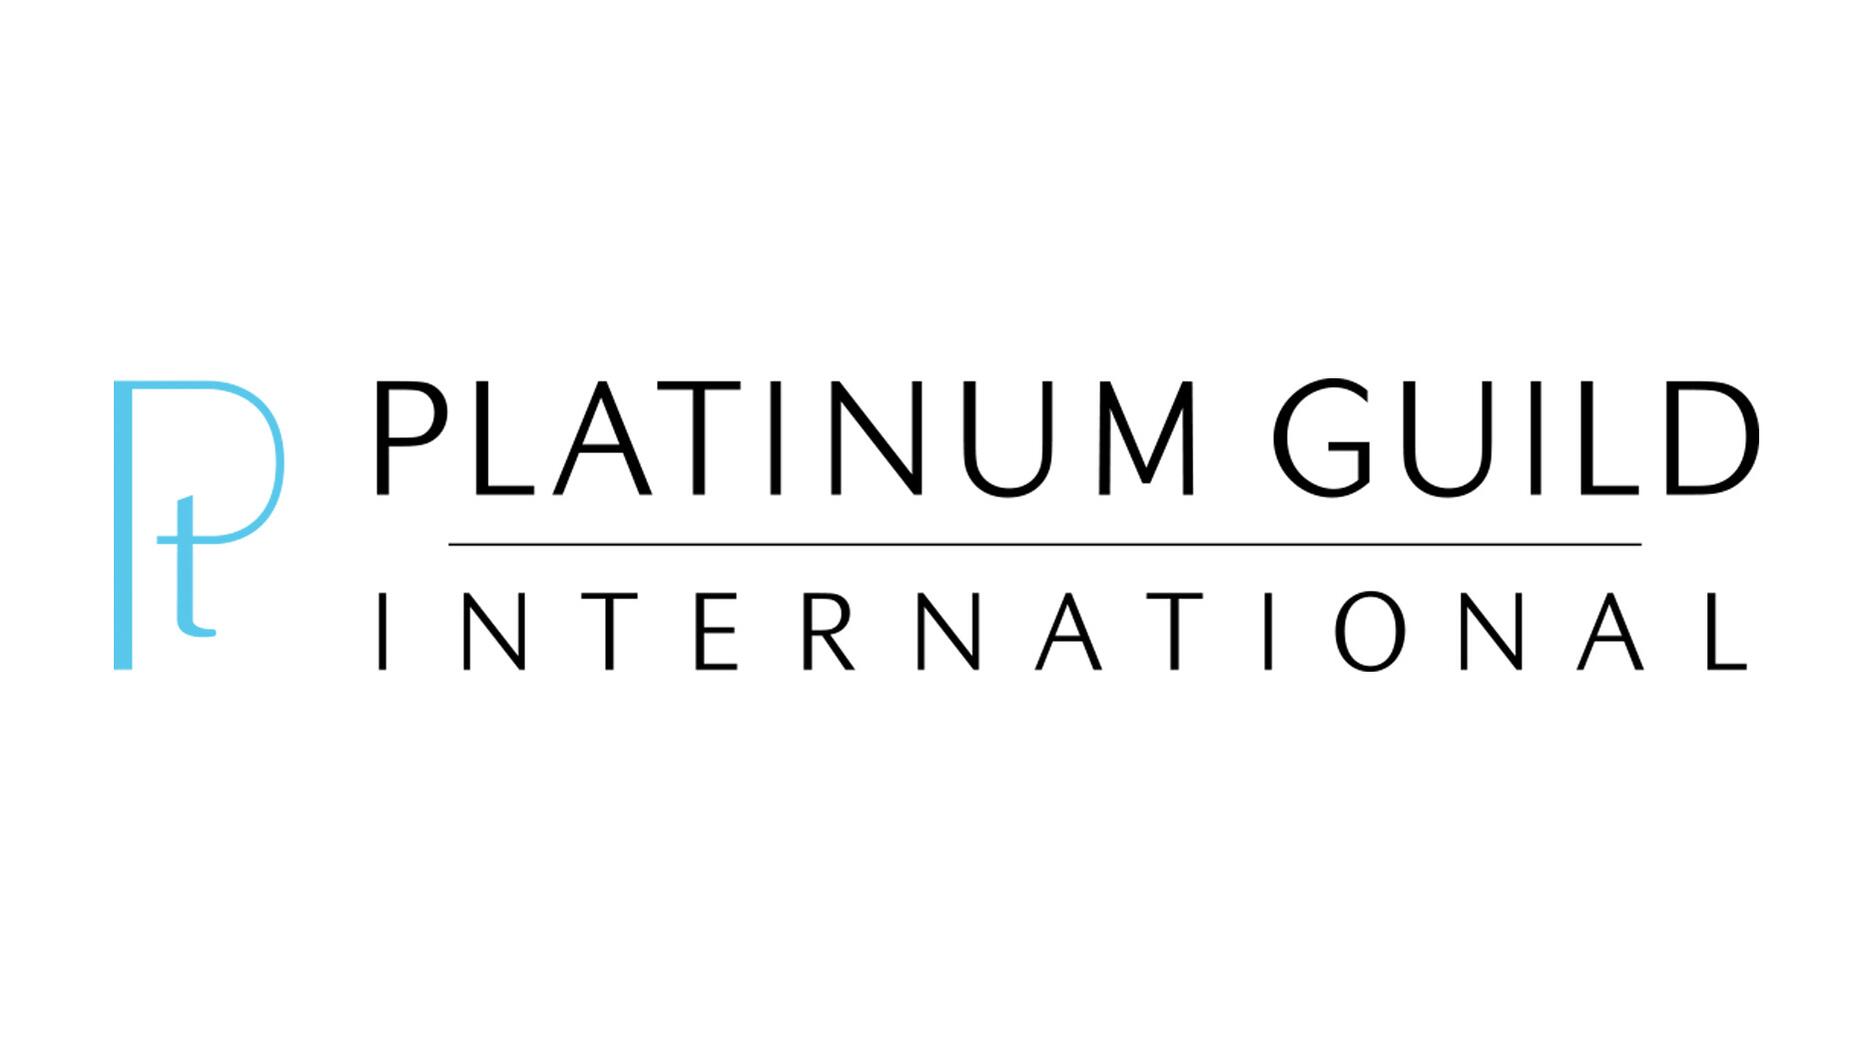    Platinum Guild International logo 